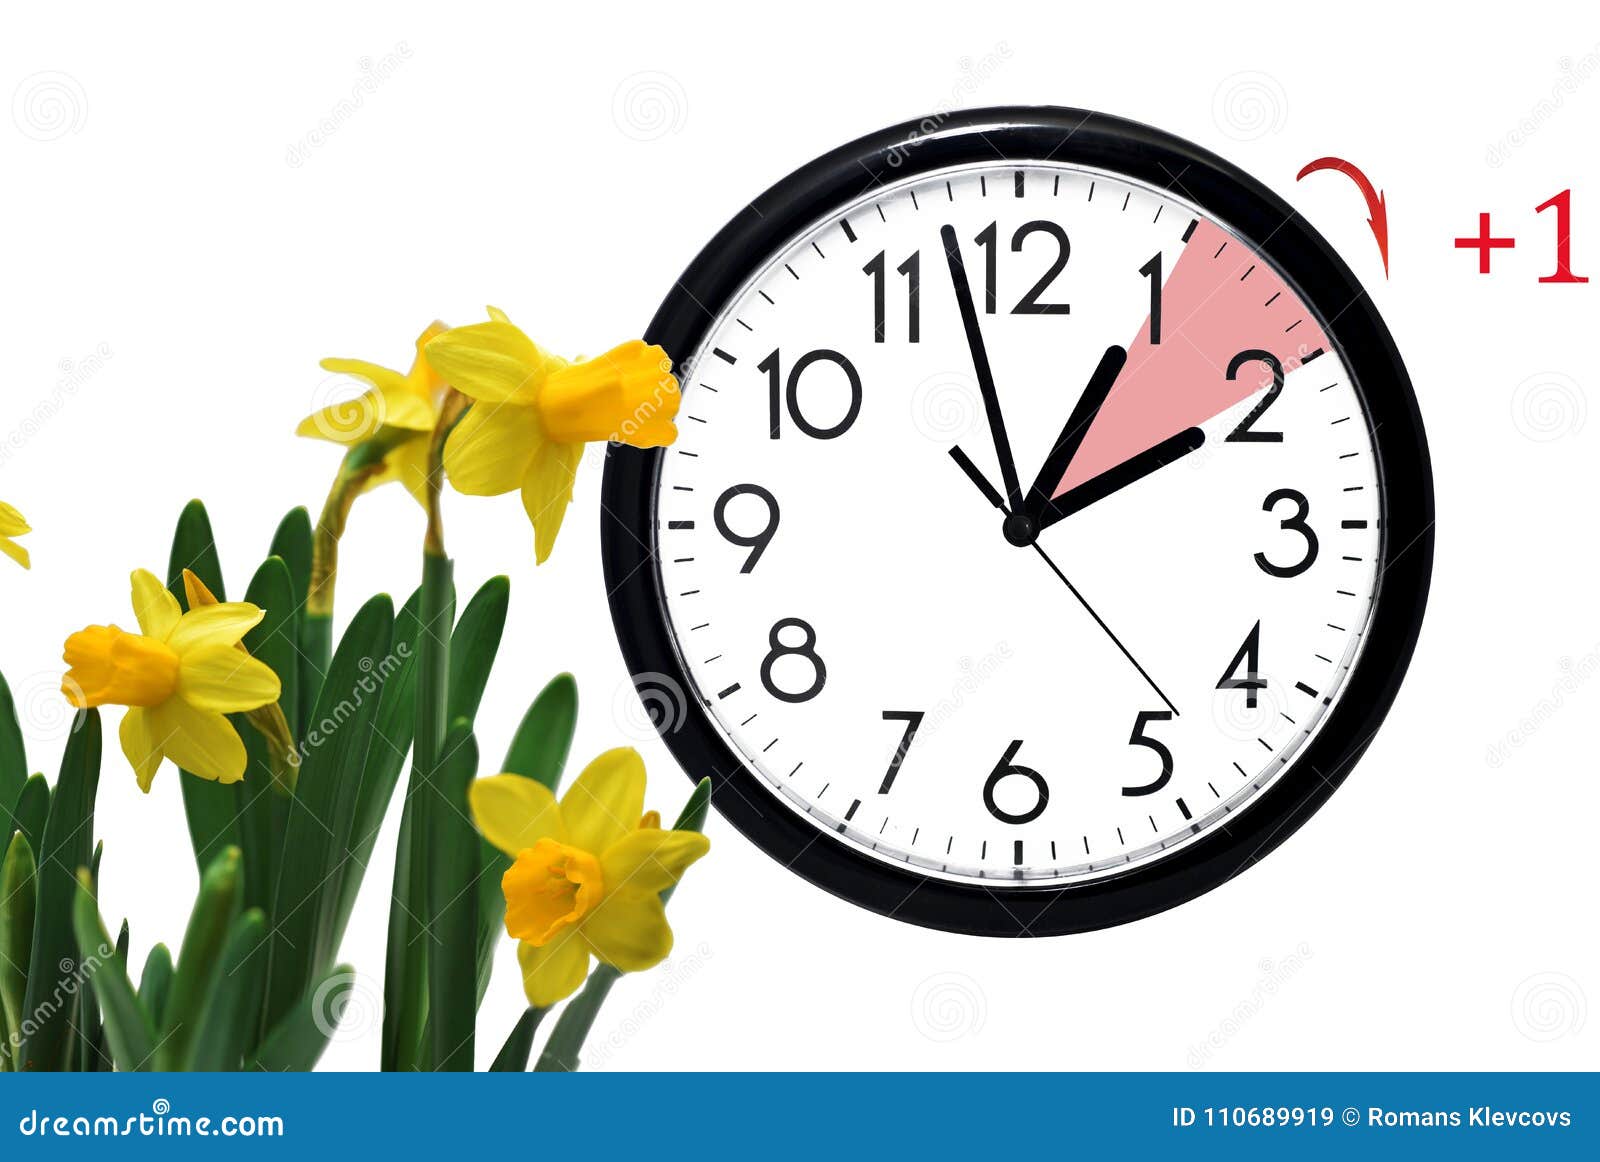 Daylight Saving Time. Change Clock To Summer Time. Stock Image Image